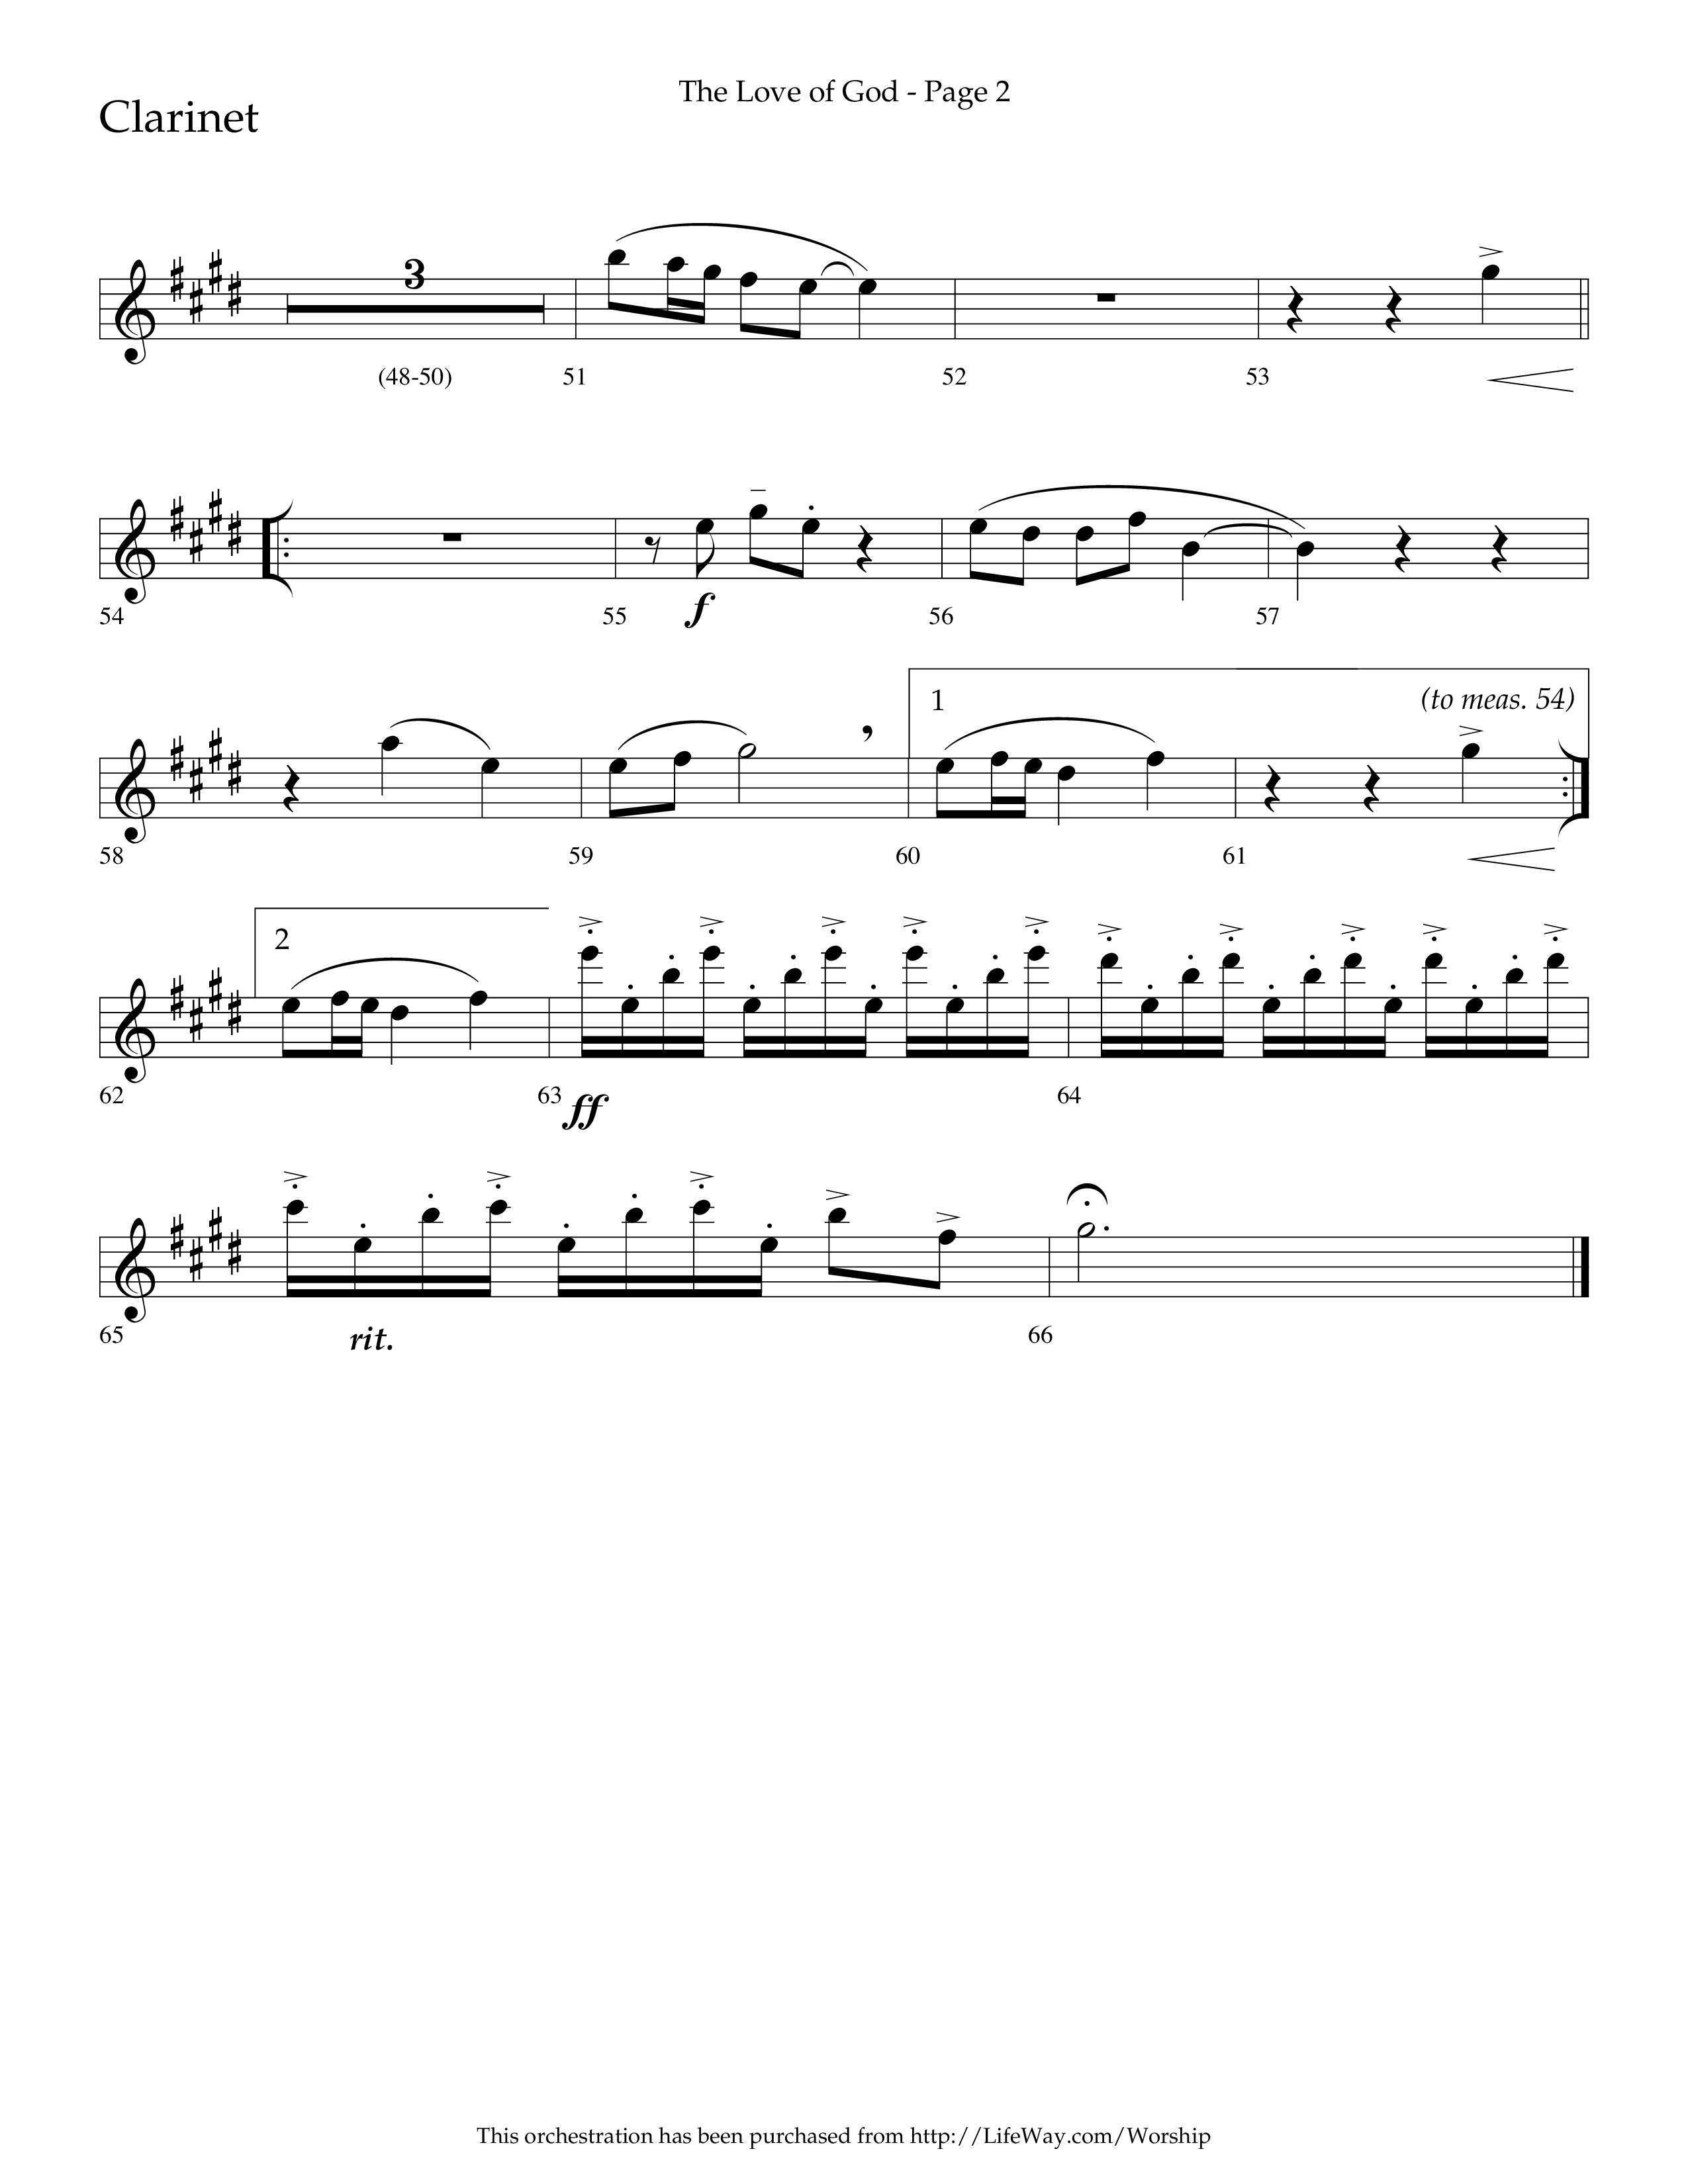 The Love of God (Choral Anthem SATB) Clarinet 1/2 (Arr. Charlie Sinclair / Orch. Scott Harris / Lifeway Choral)